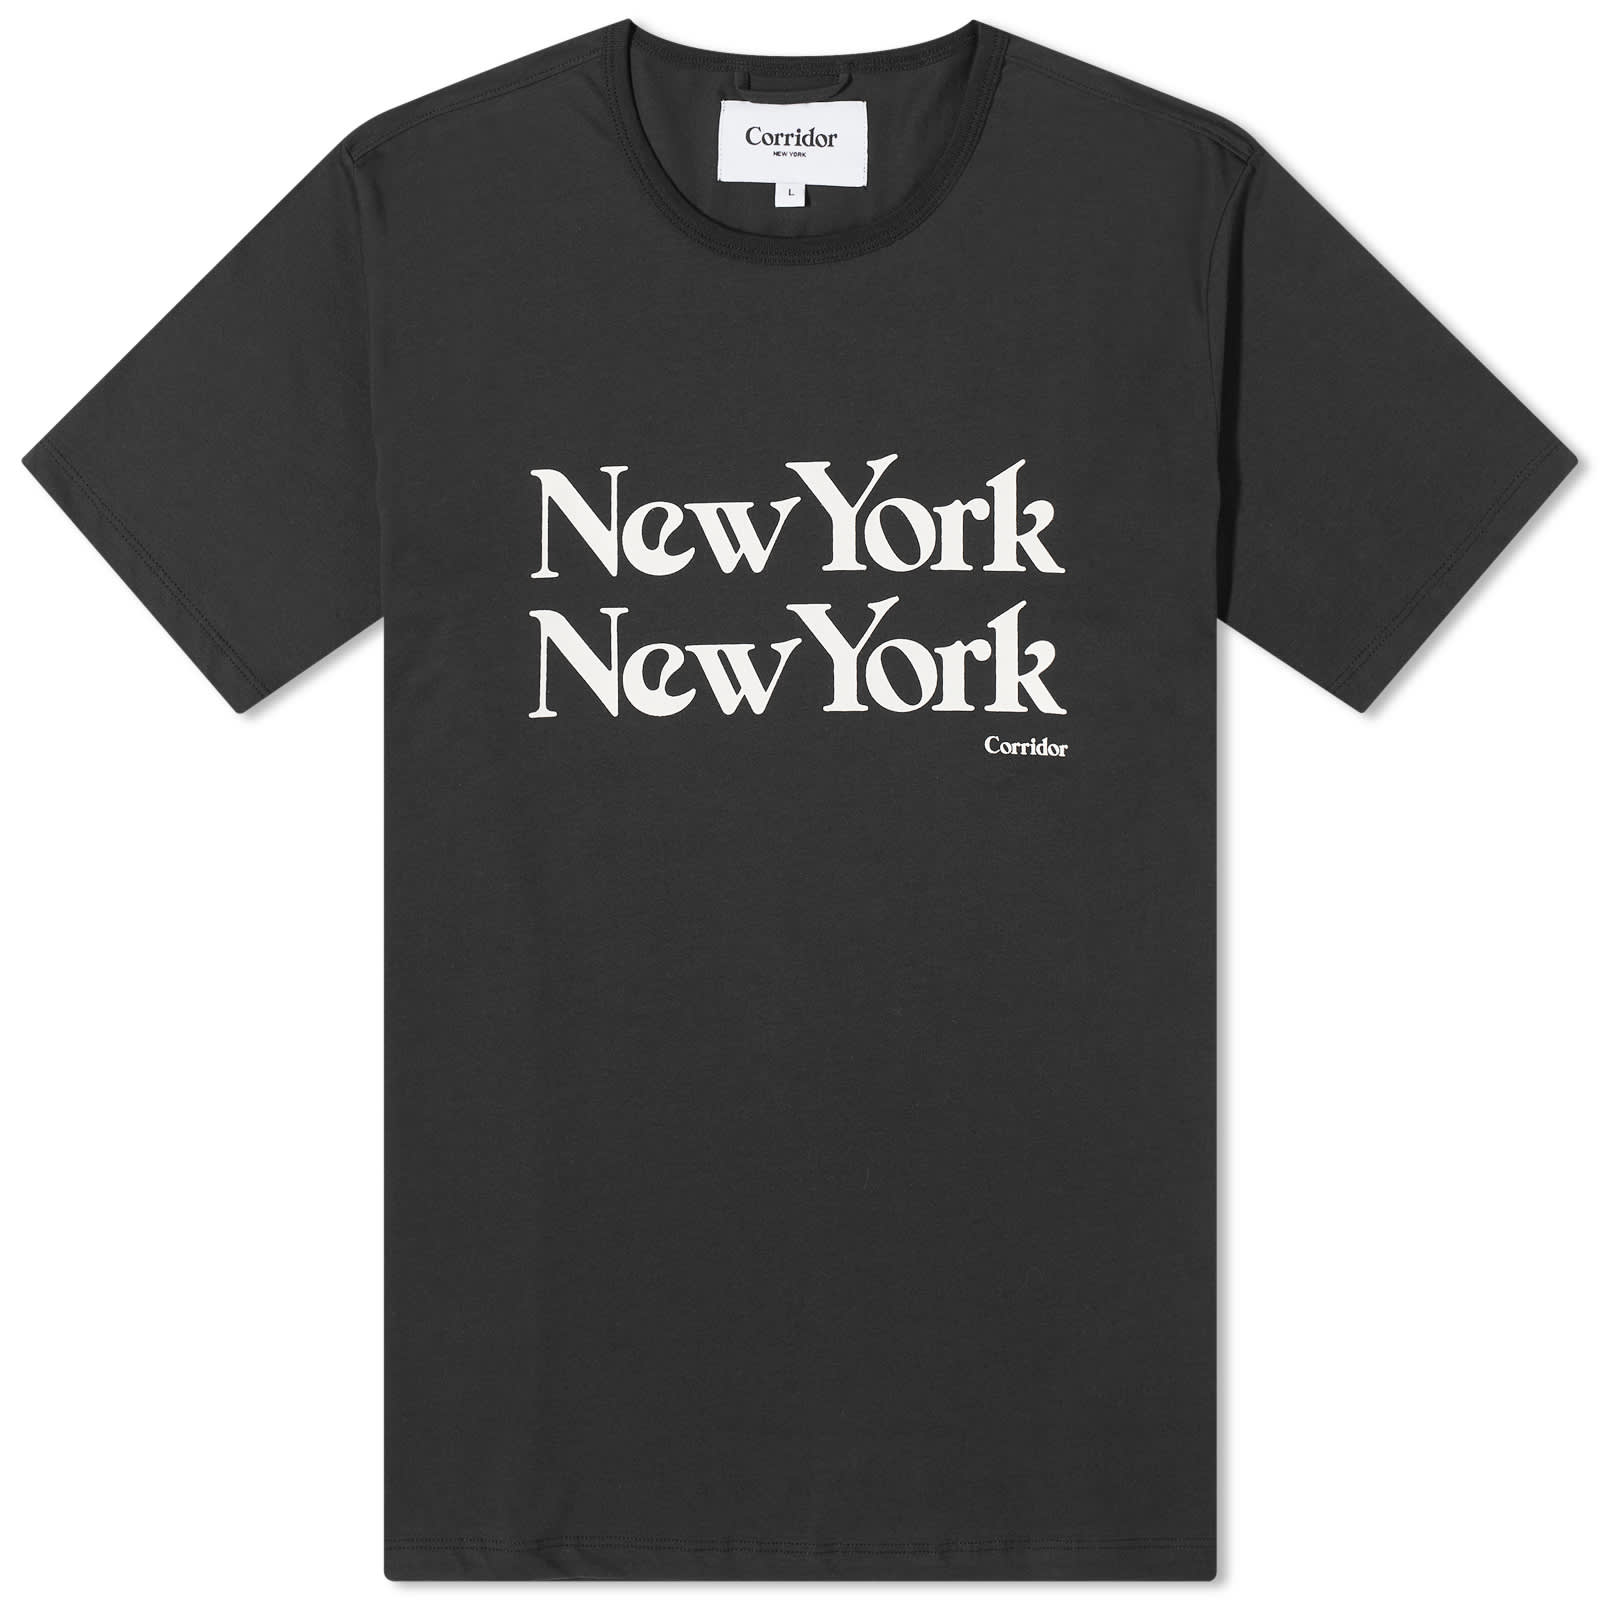 Футболка Corridor New York New York, черный футболка new york hardcore cross heathergray s 3xl nyhc agnostic front madball мужская хлопковая футболка с принтом футболка